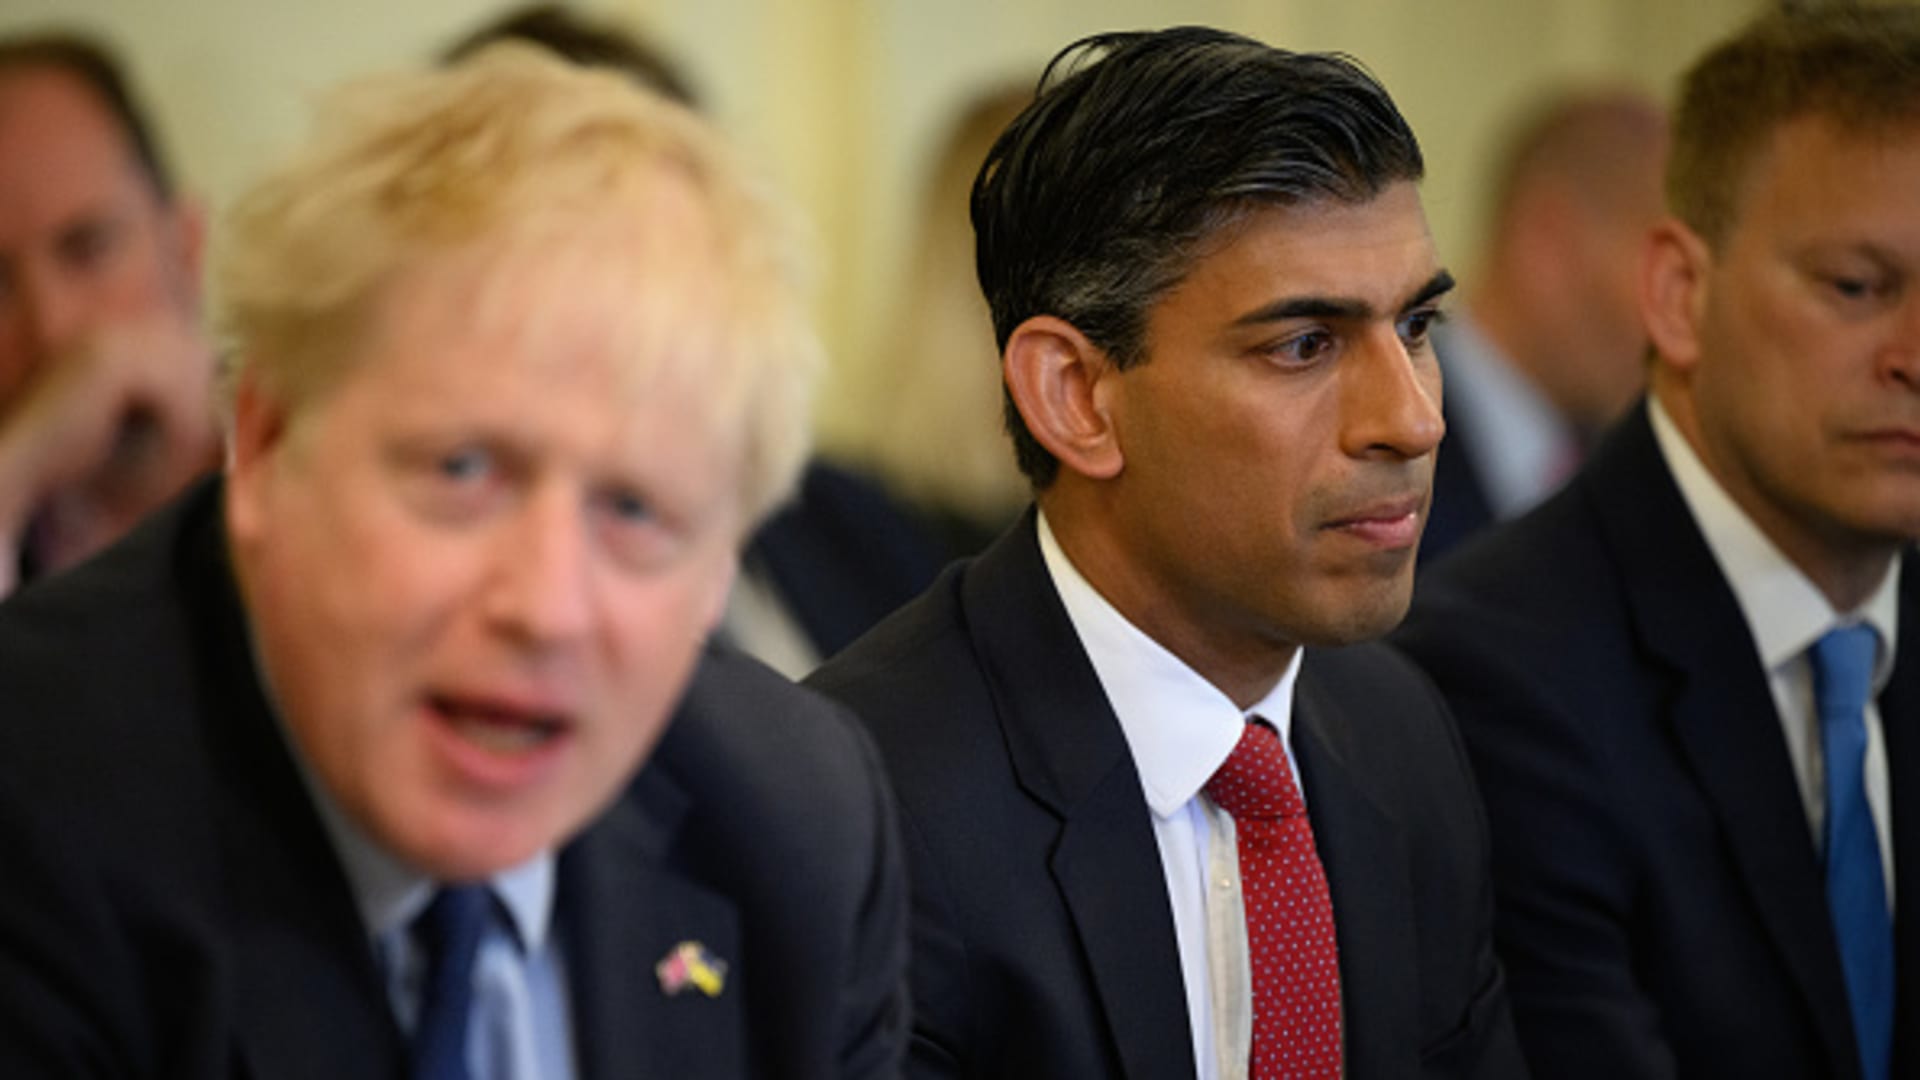 UK Finance Minister Rishi Sunak resigns in serious blow to Boris Johnson’s leadership